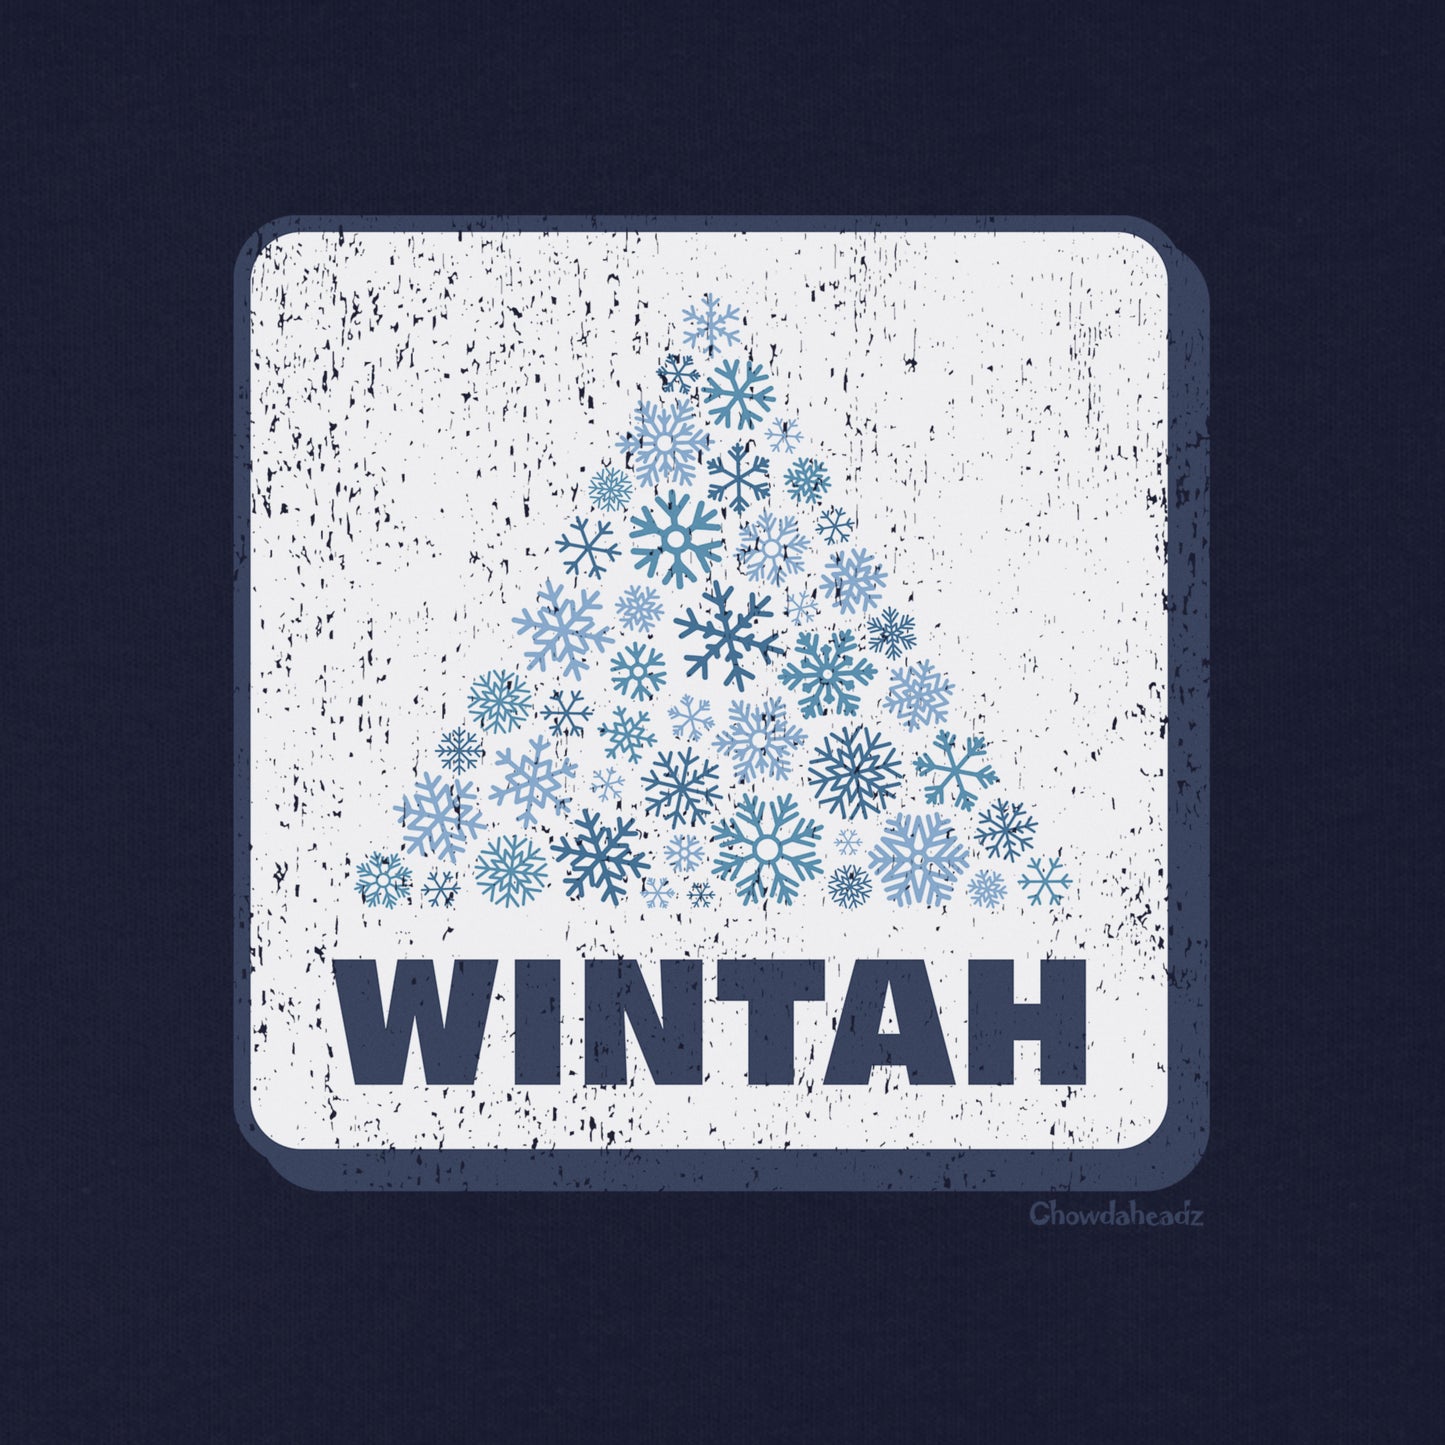 Wintah Snowflake Youth T-shirt - Chowdaheadz